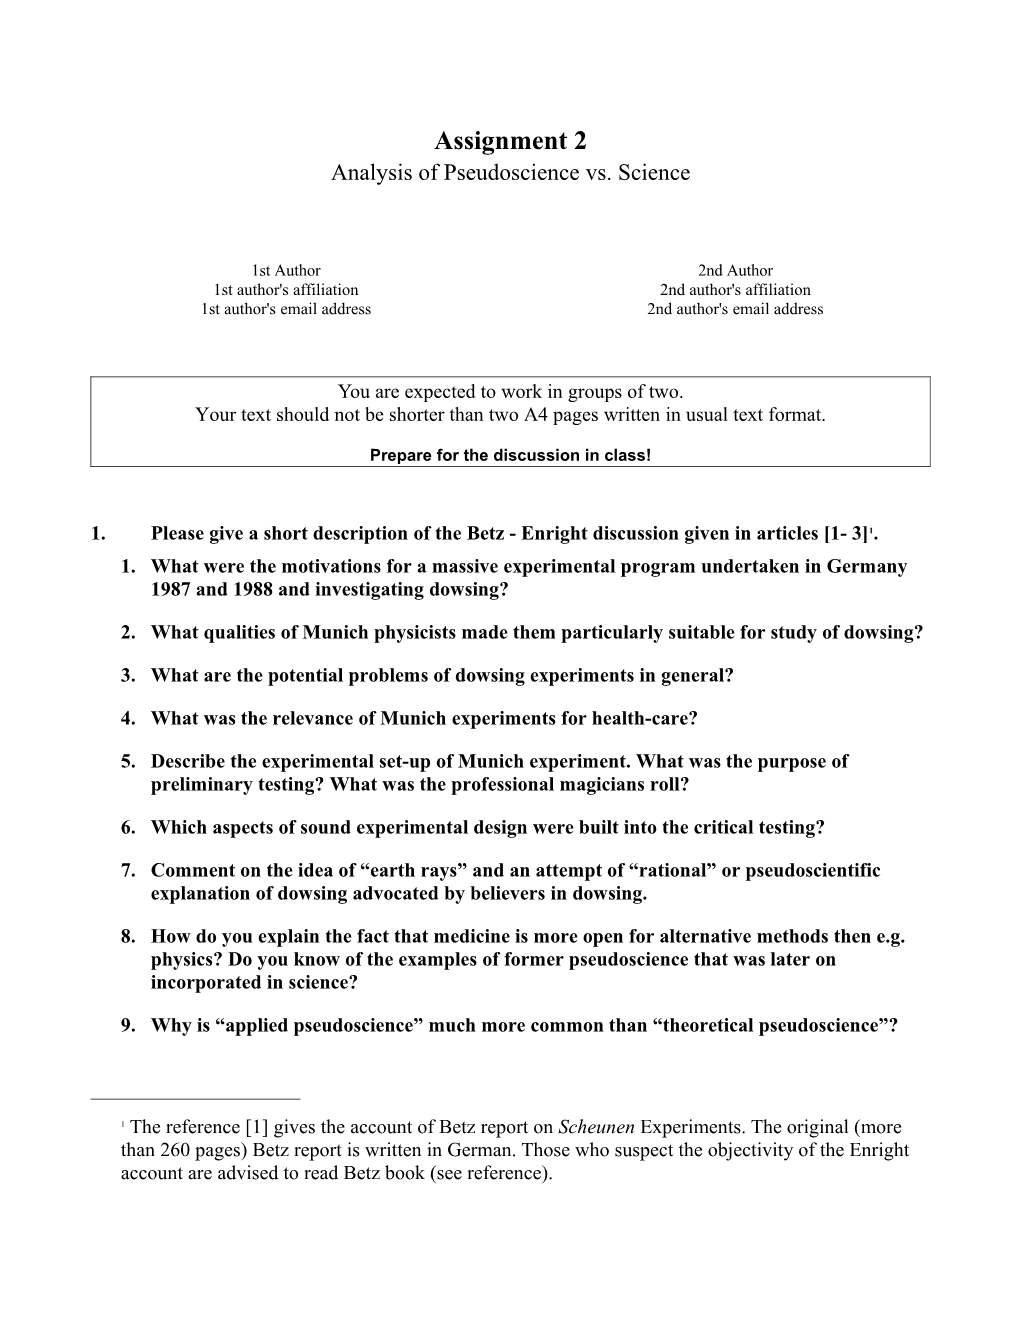 Proceedings Template - WORD s37